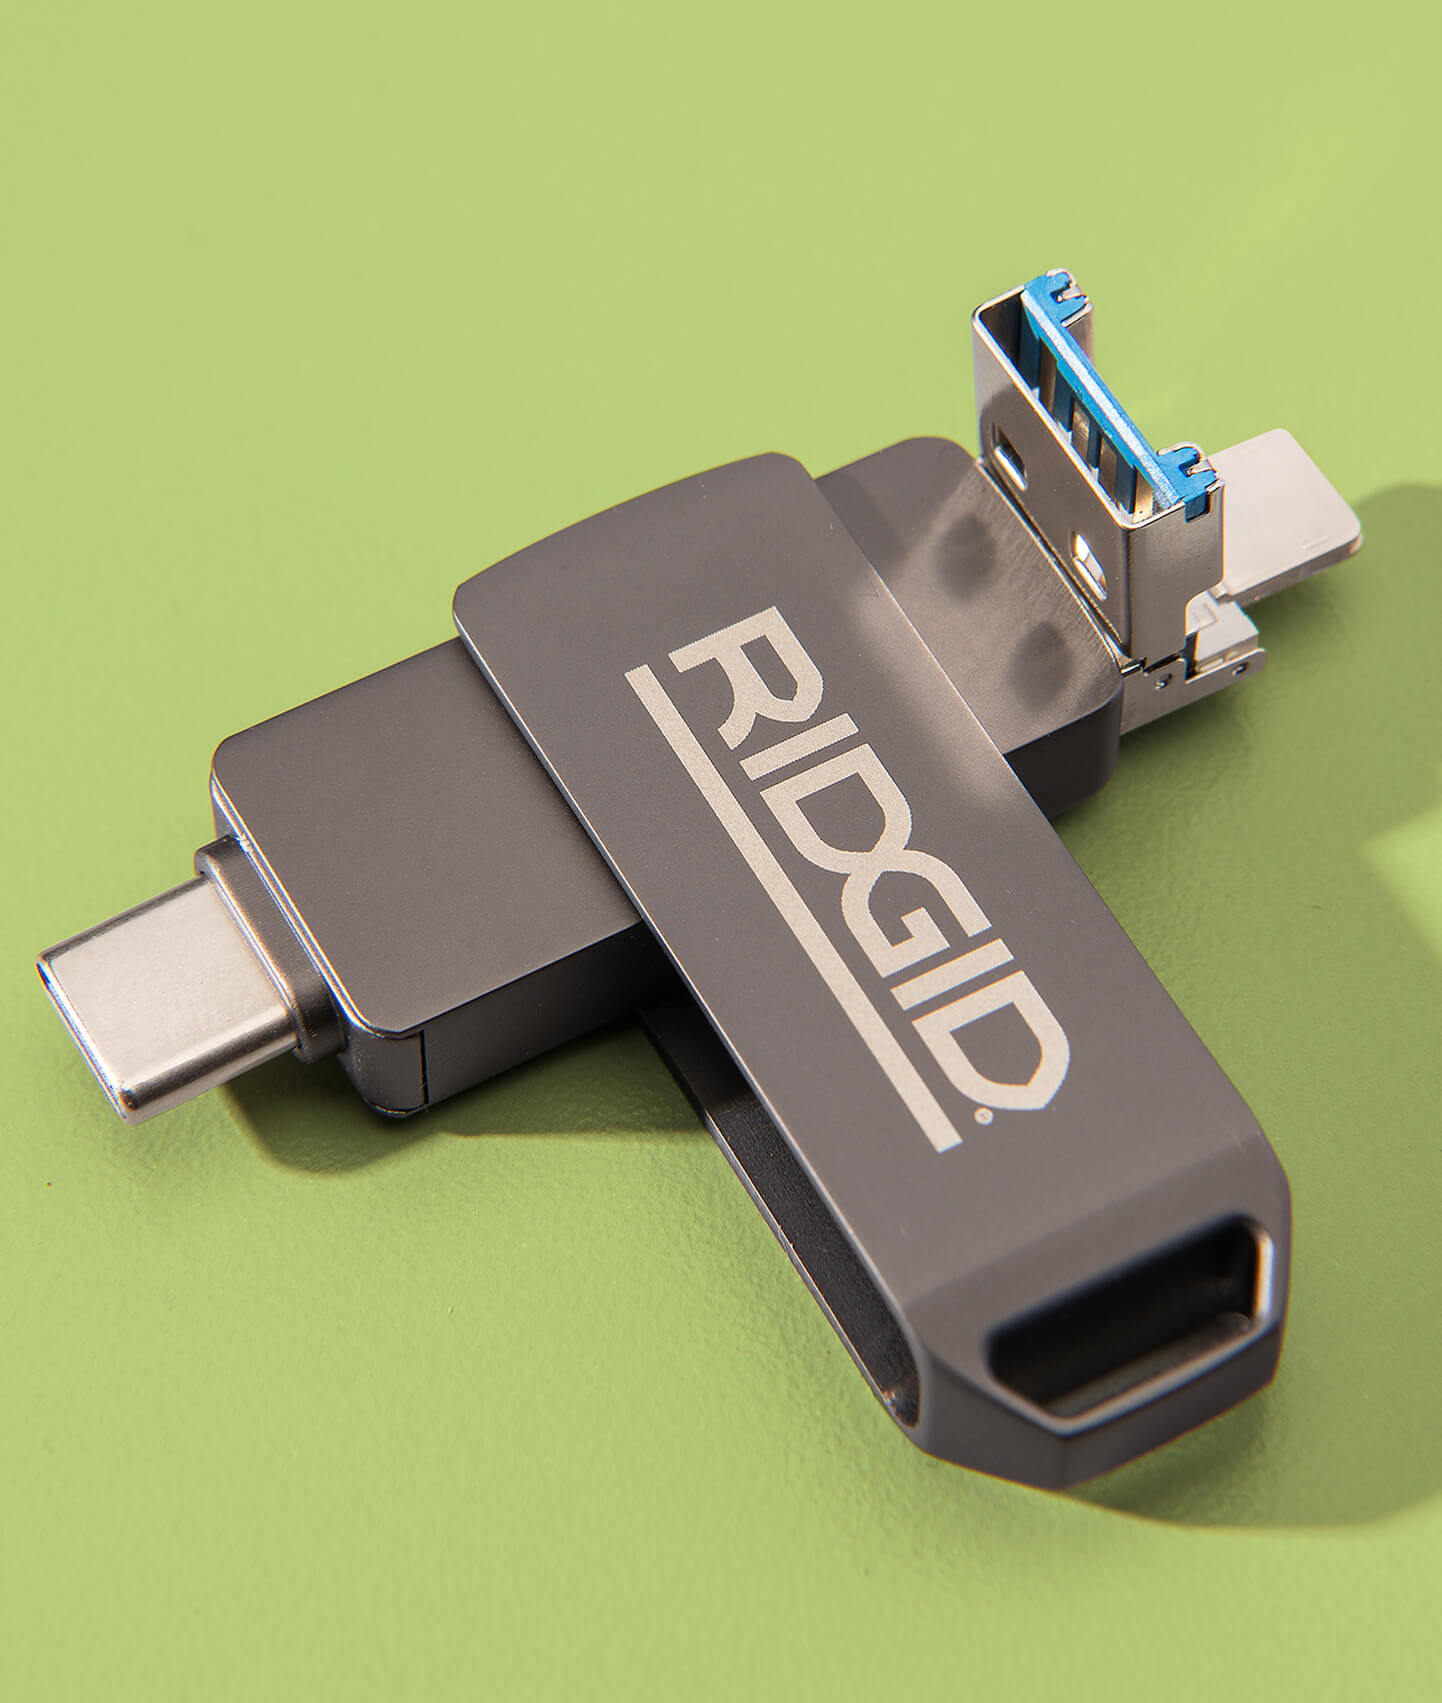 USB | The Ridge Tool Company